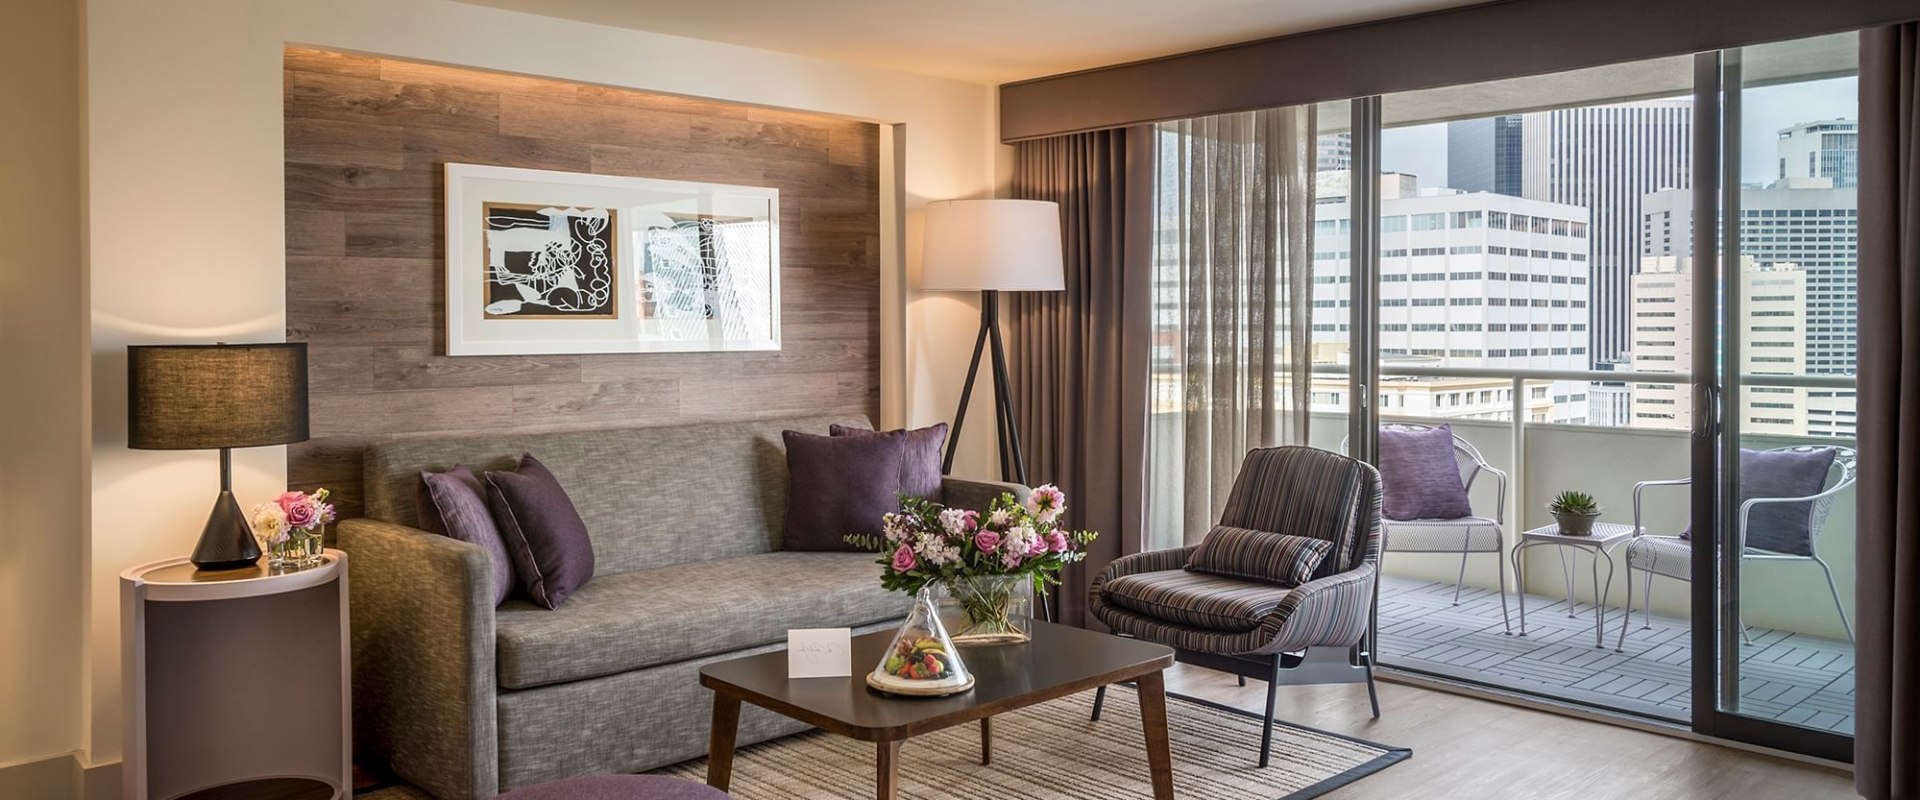 Luxury Suites with Panoramic Views in Denver, Colorado